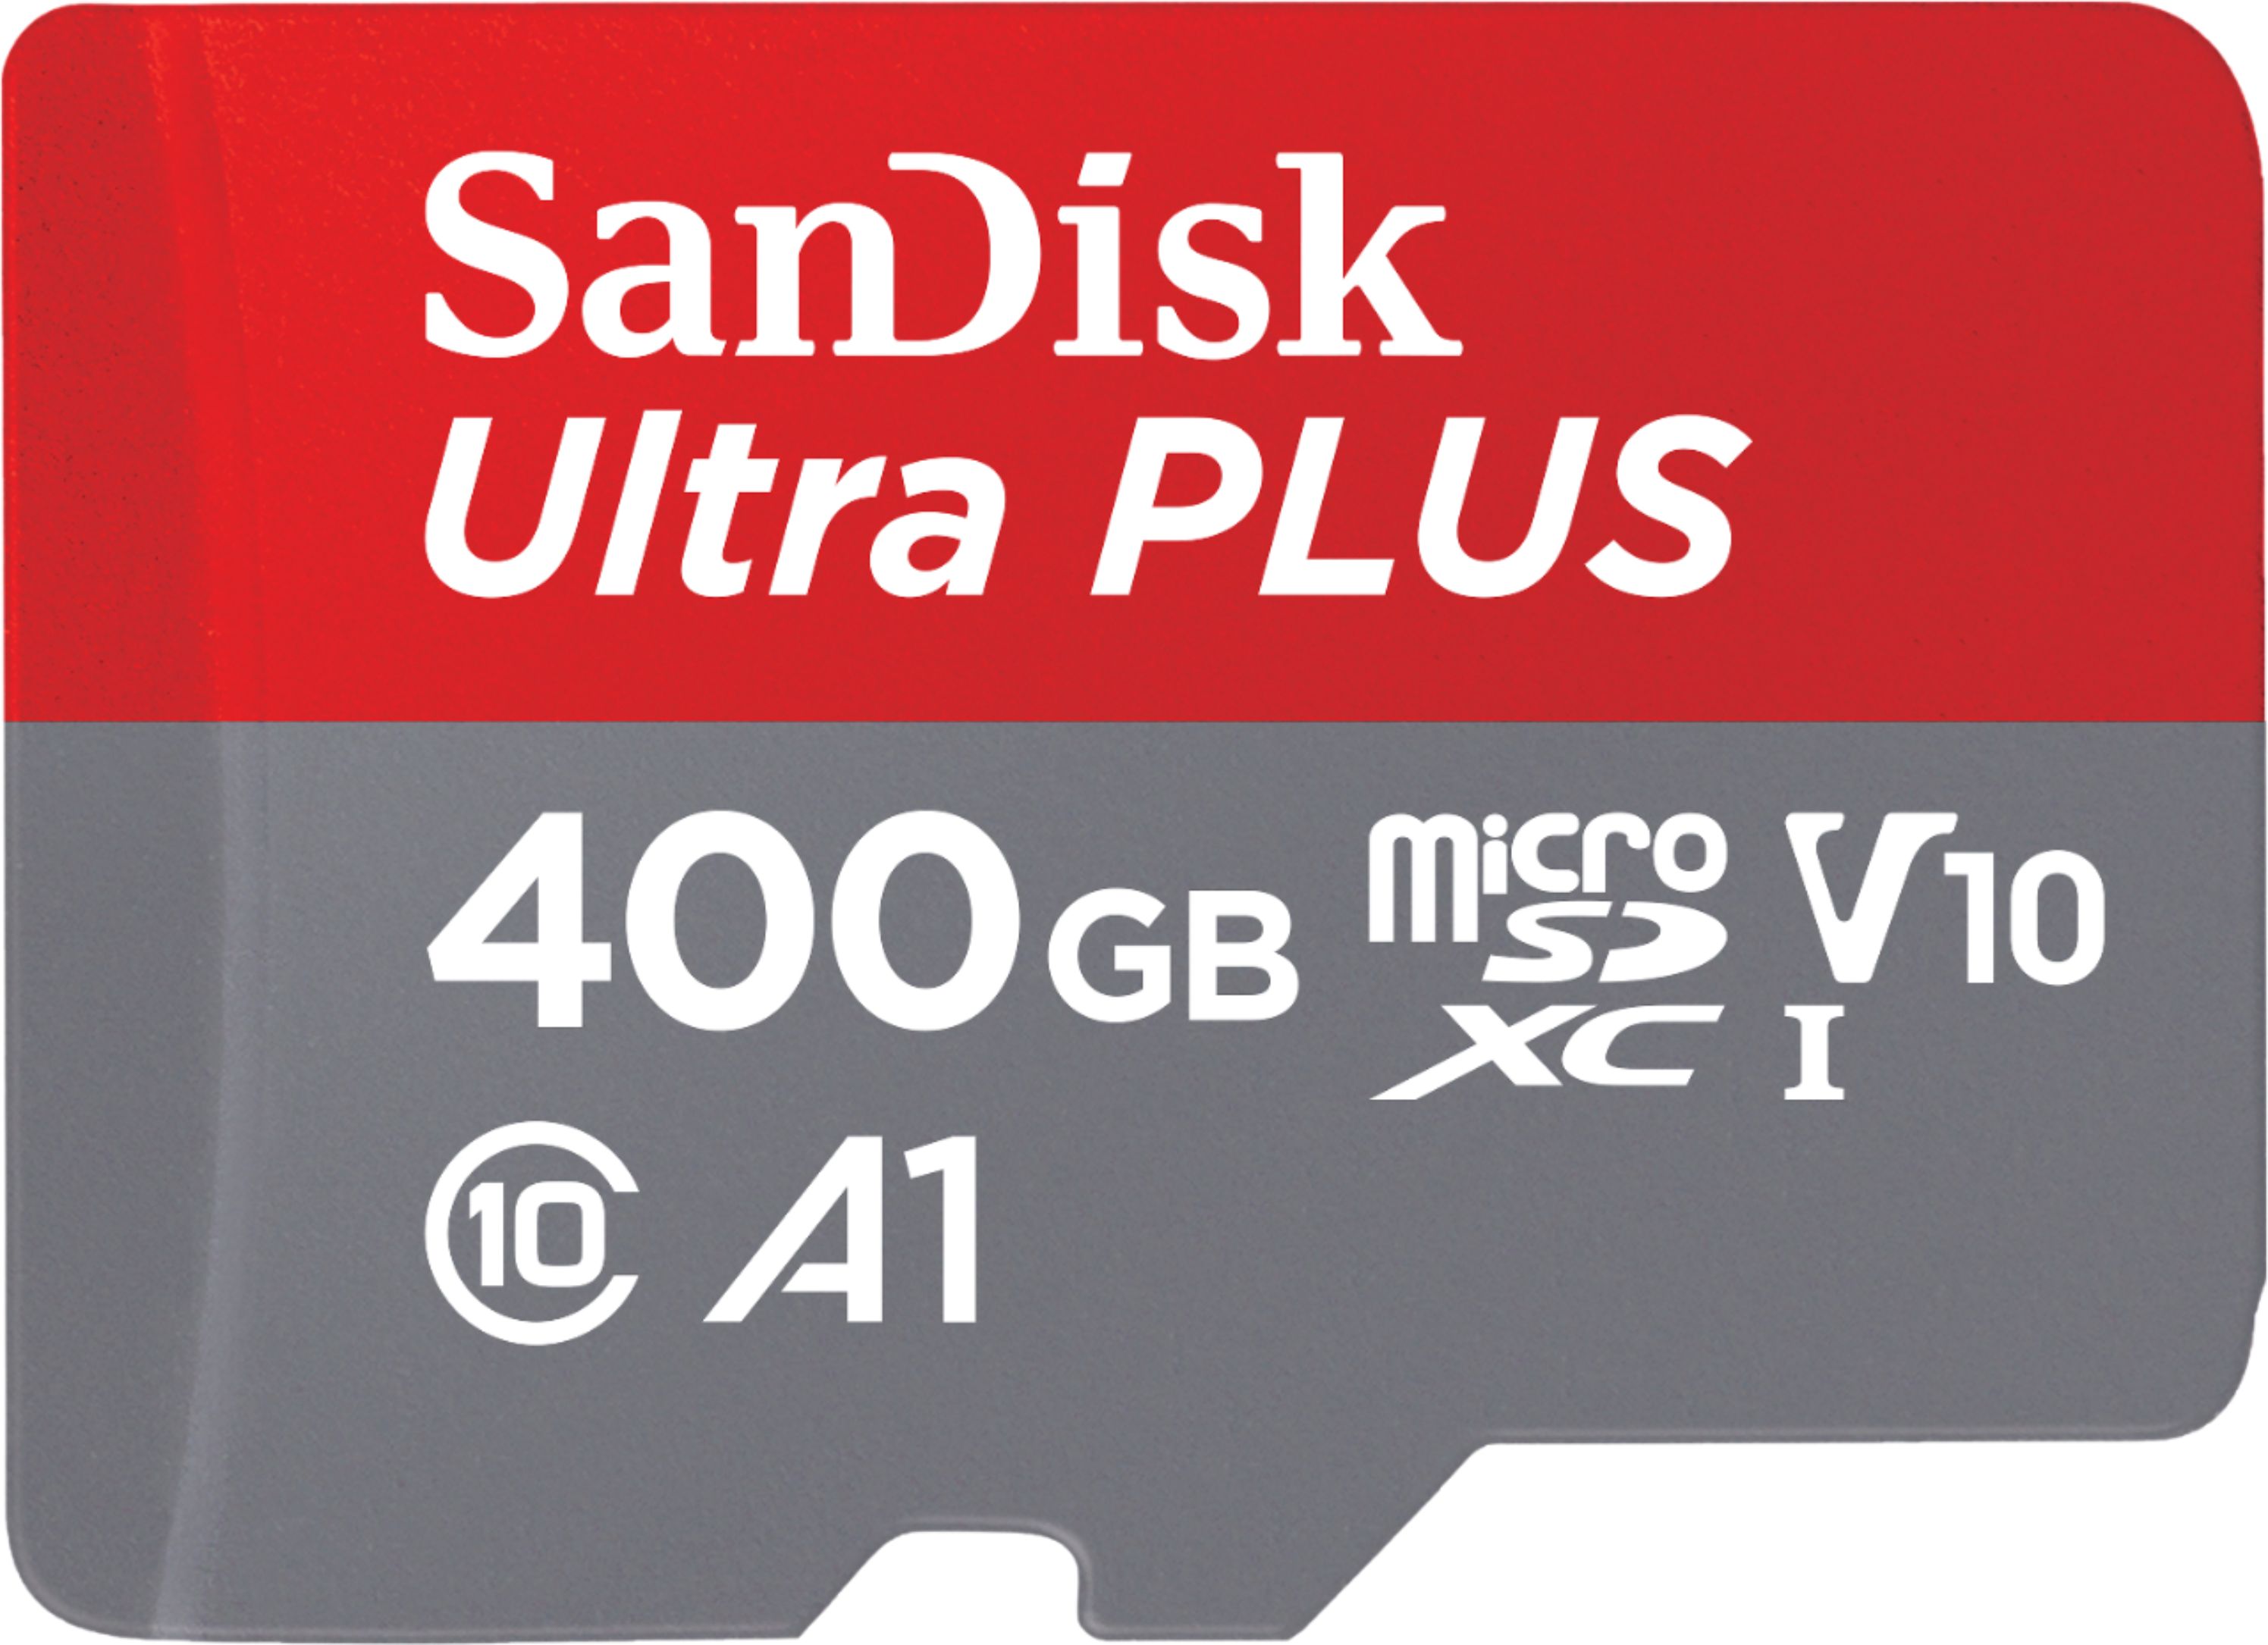 microSD Cards - Best Buy